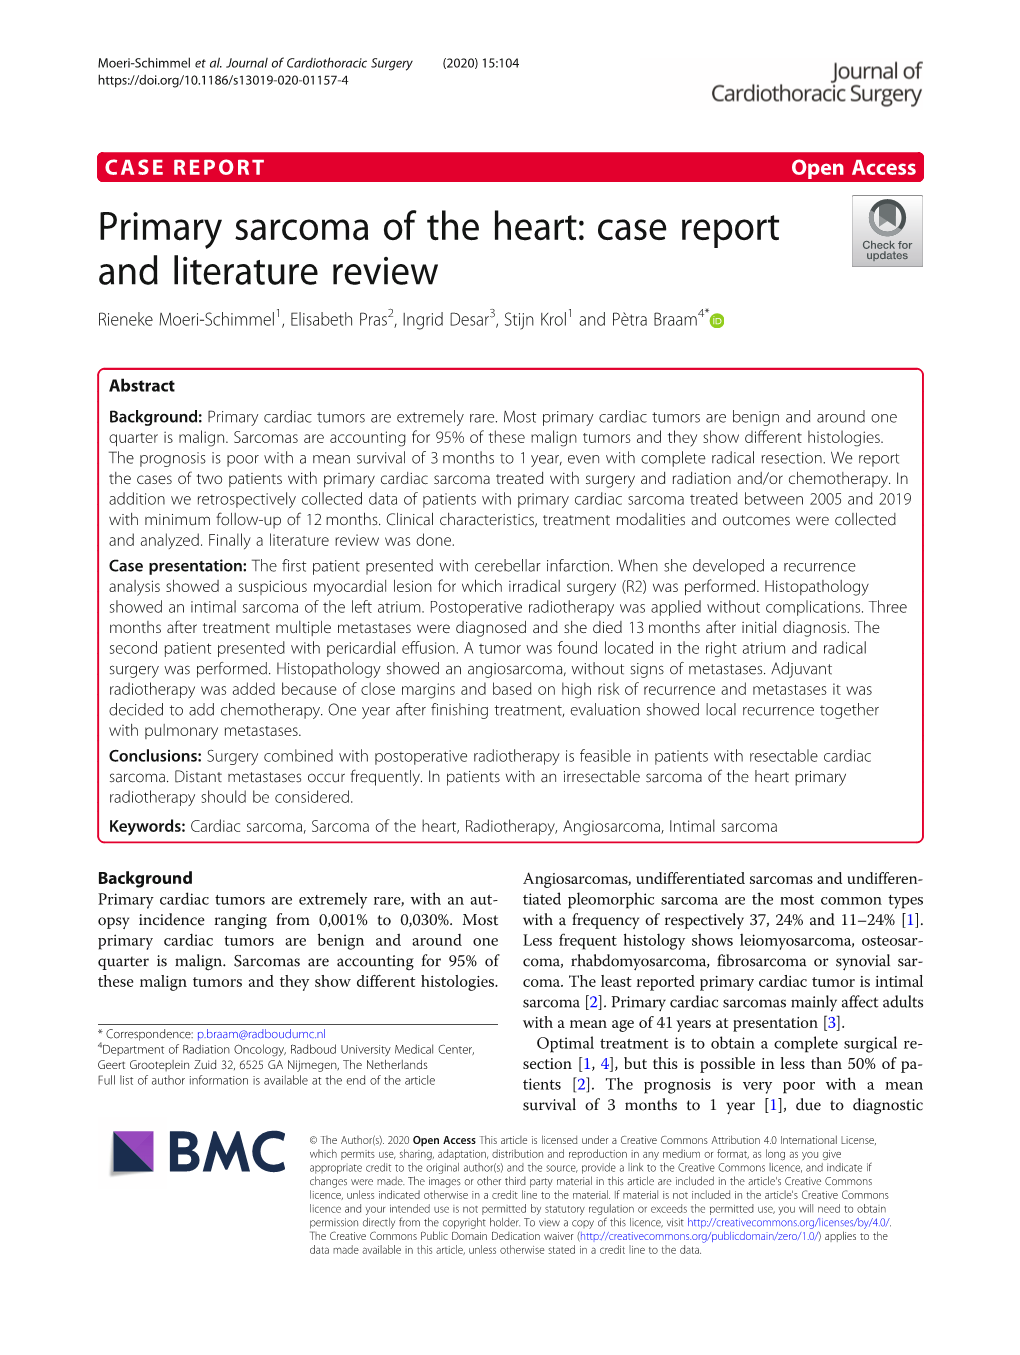 Primary Sarcoma of the Heart: Case Report and Literature Review Rieneke Moeri-Schimmel1, Elisabeth Pras2, Ingrid Desar3, Stijn Krol1 and Pètra Braam4*